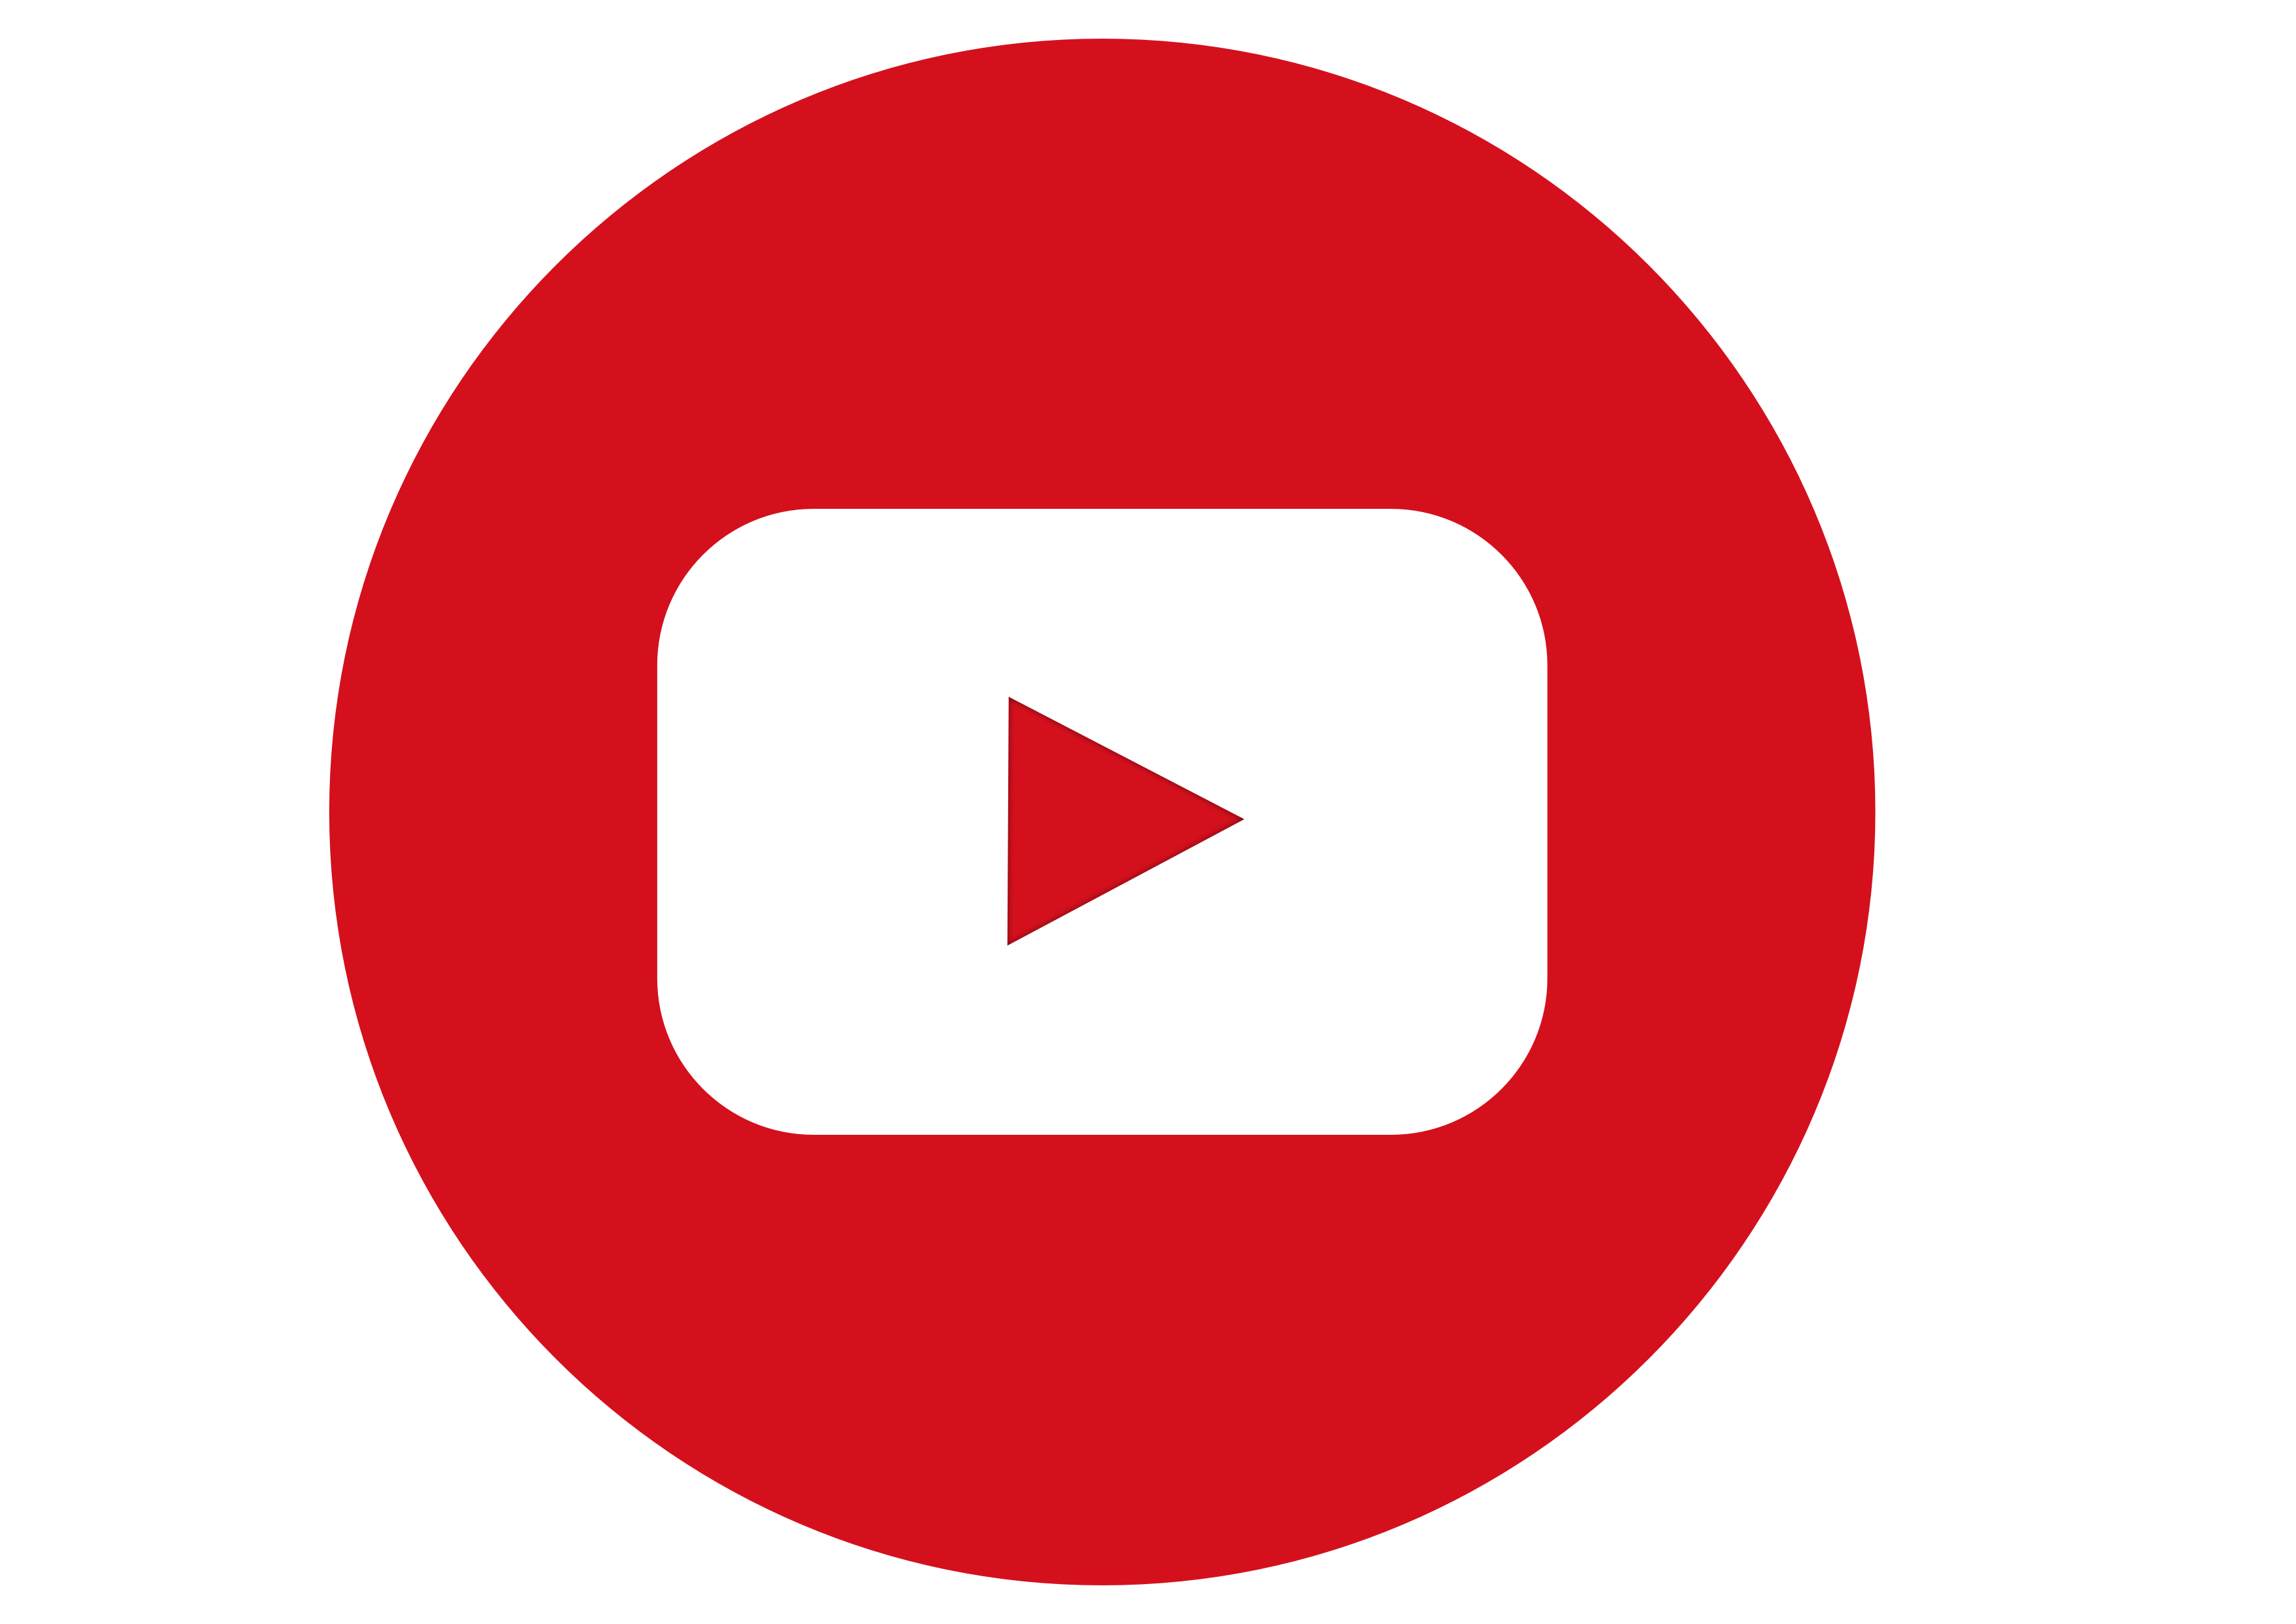 youtube symbol